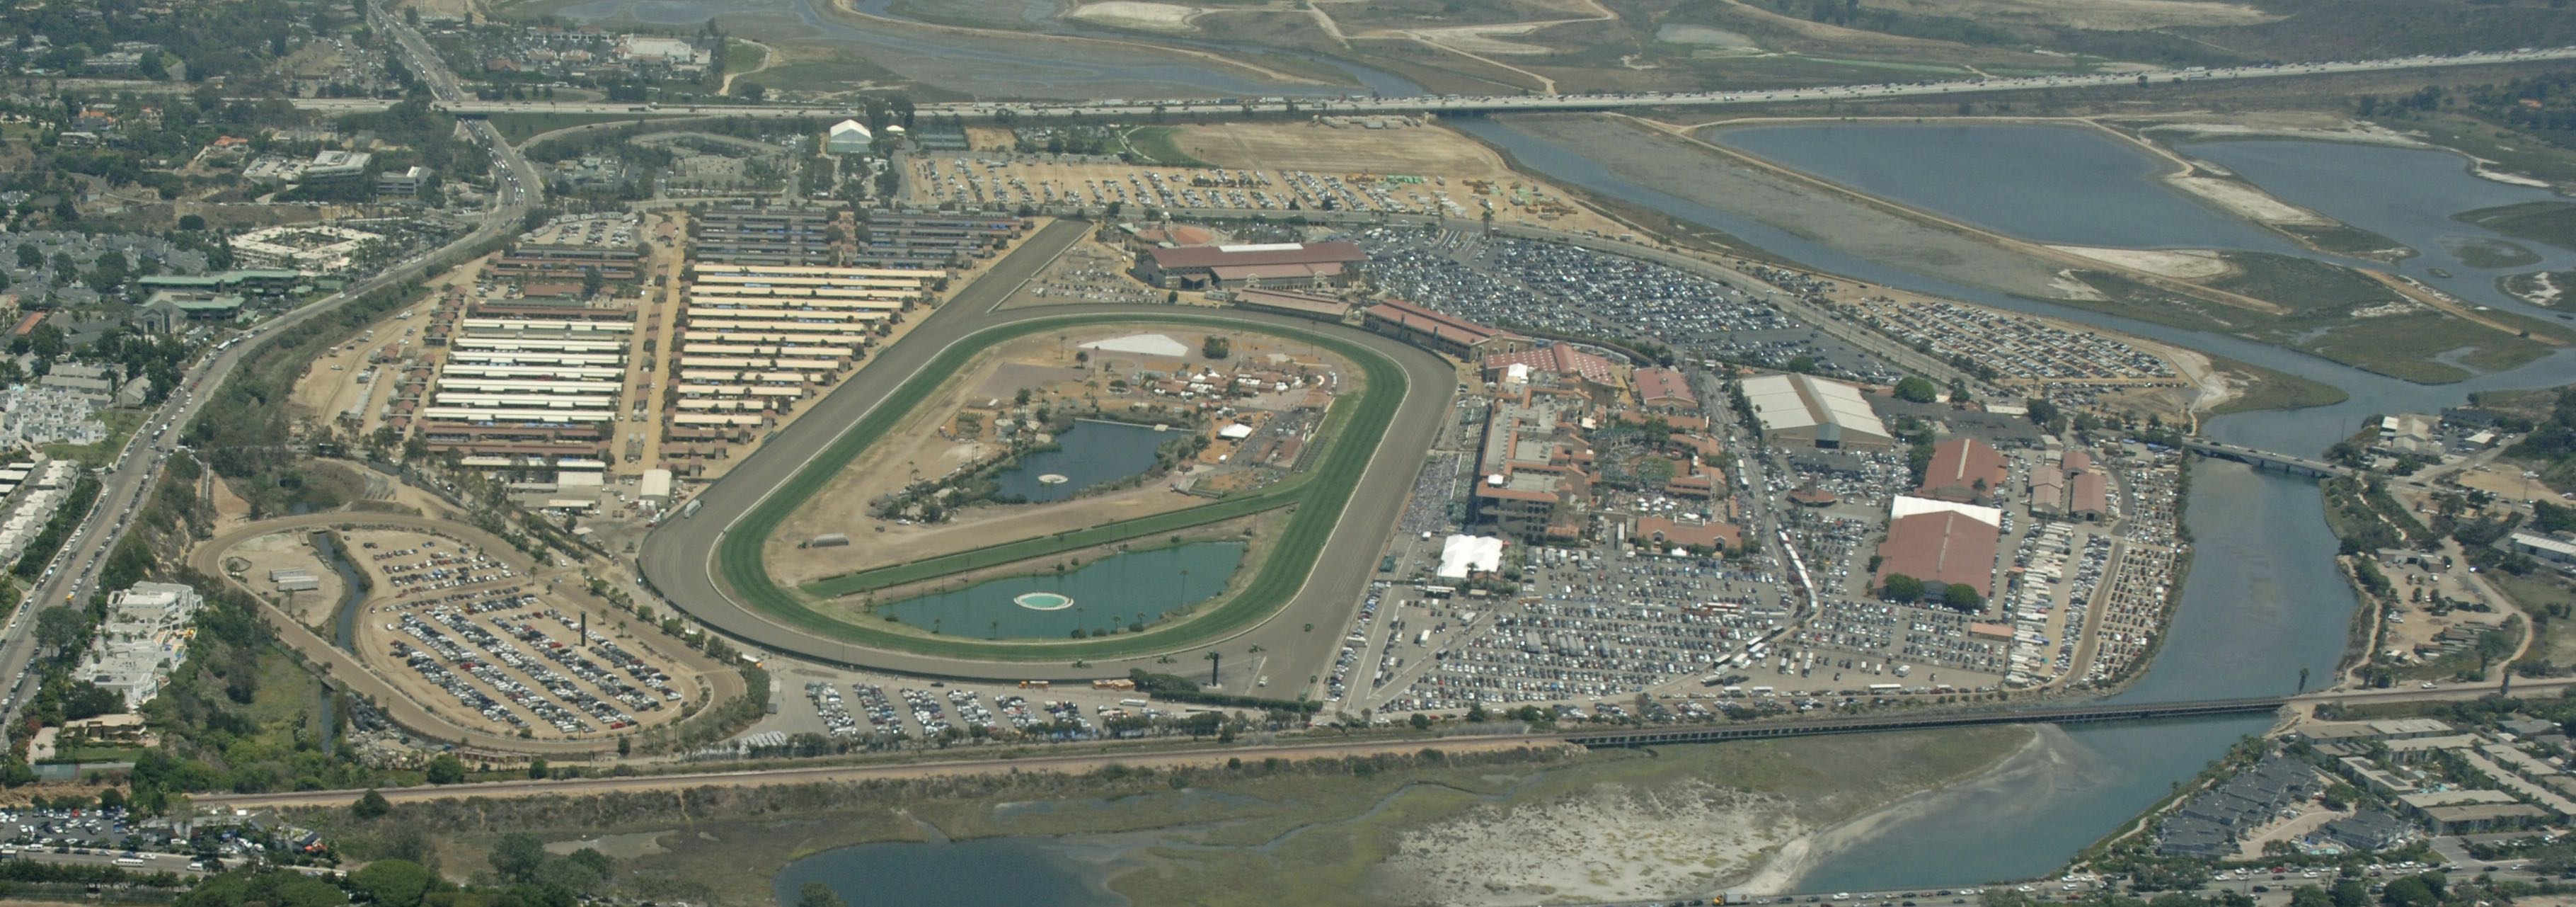 Del Mar Racetrack Aerial